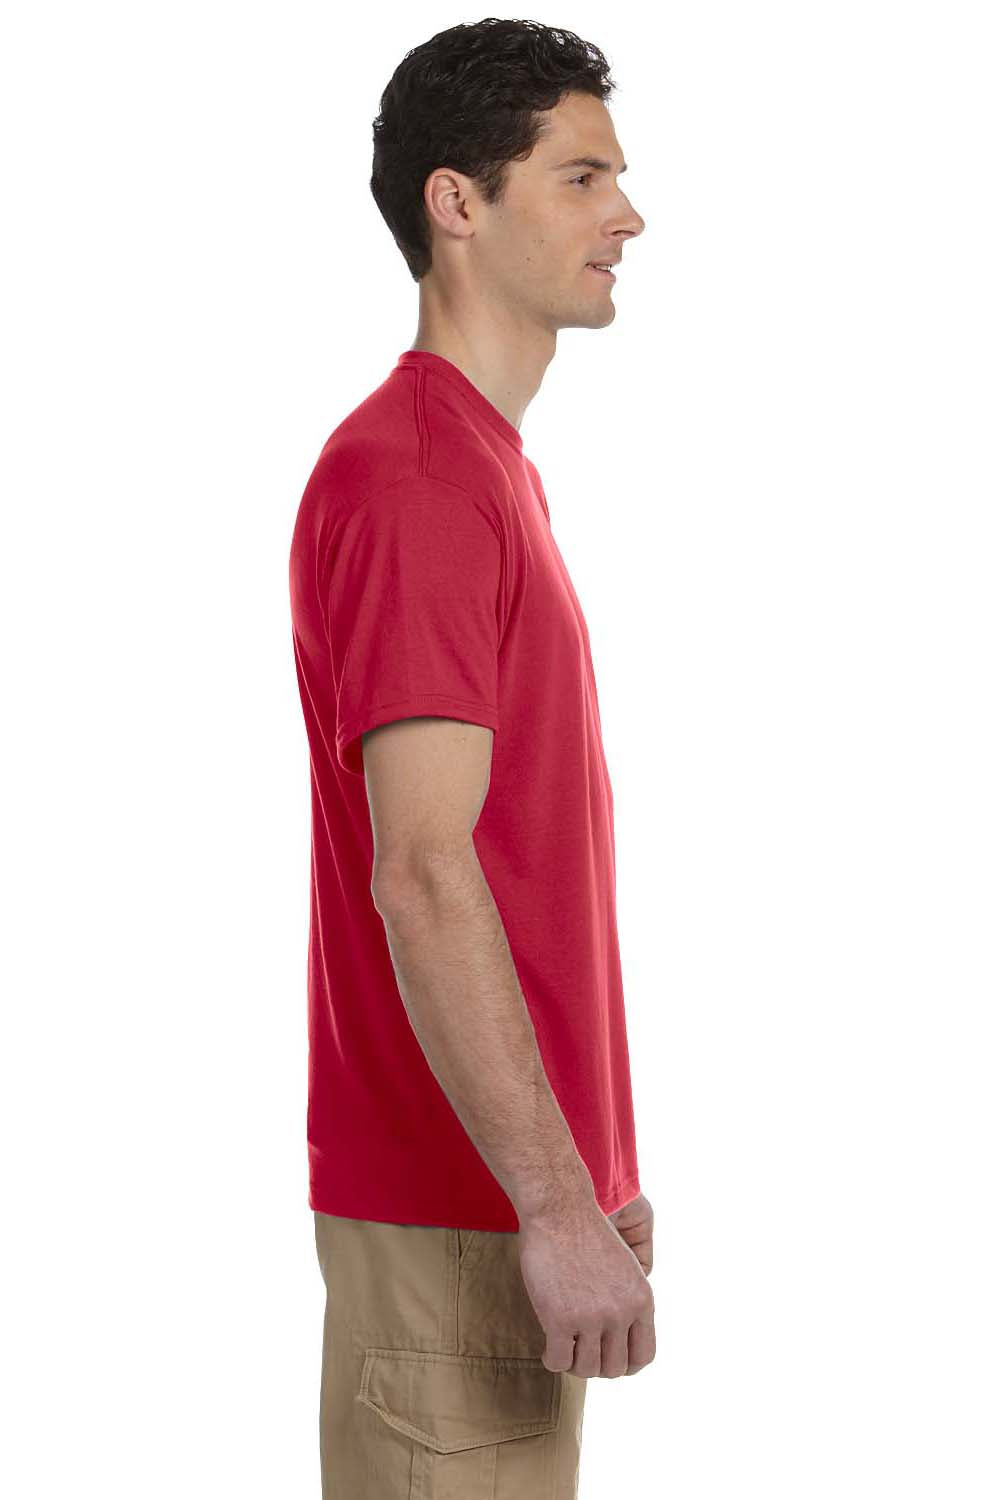 Jerzees 21M Mens Dri-Power Moisture Wicking Short Sleeve Crewneck T-Shirt Red Side